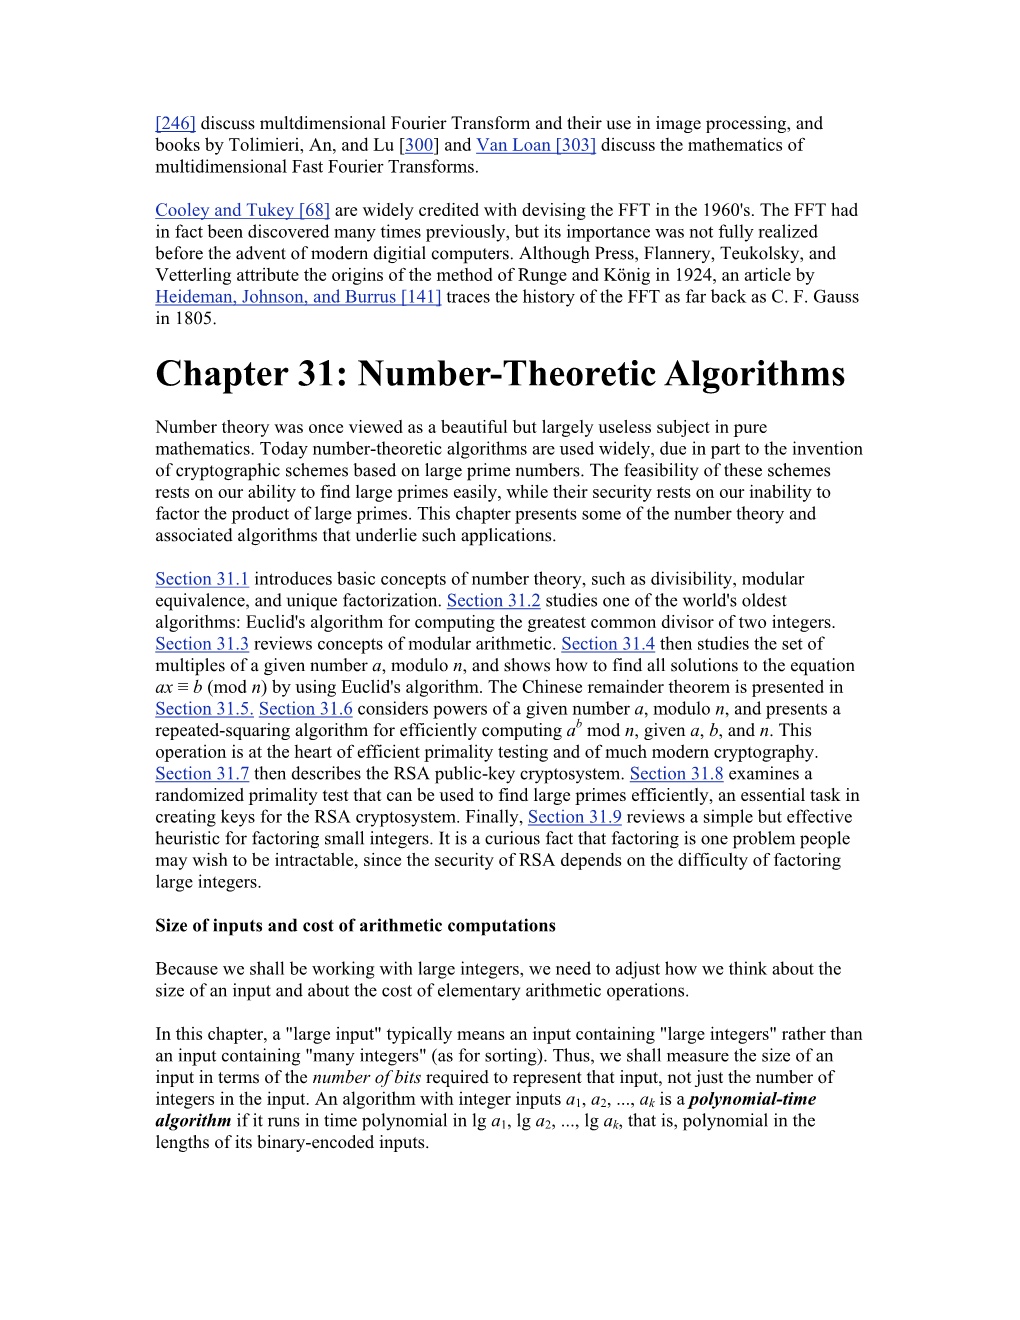 Number-Theoretic Algorithms